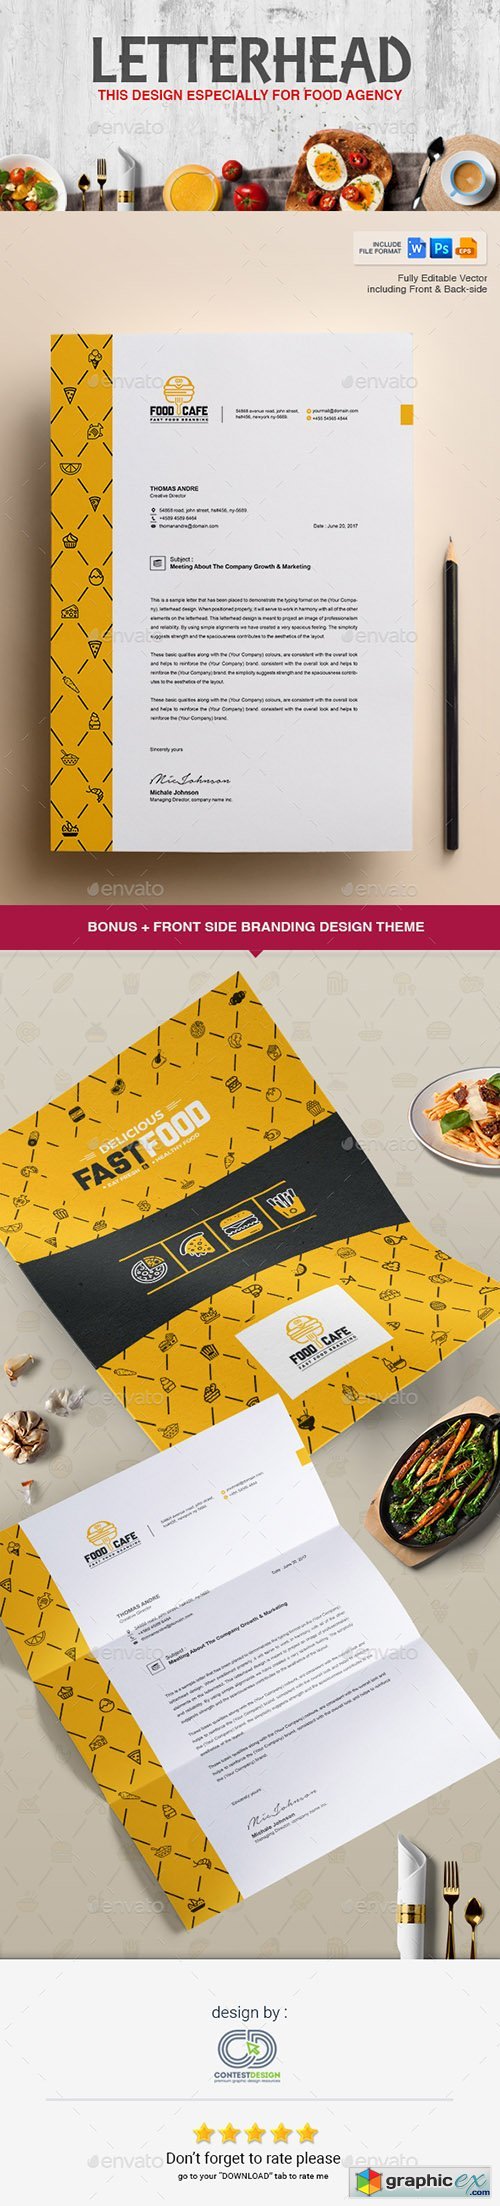 Letterhead Design Template for Fast Food / Restaurants / Cafe